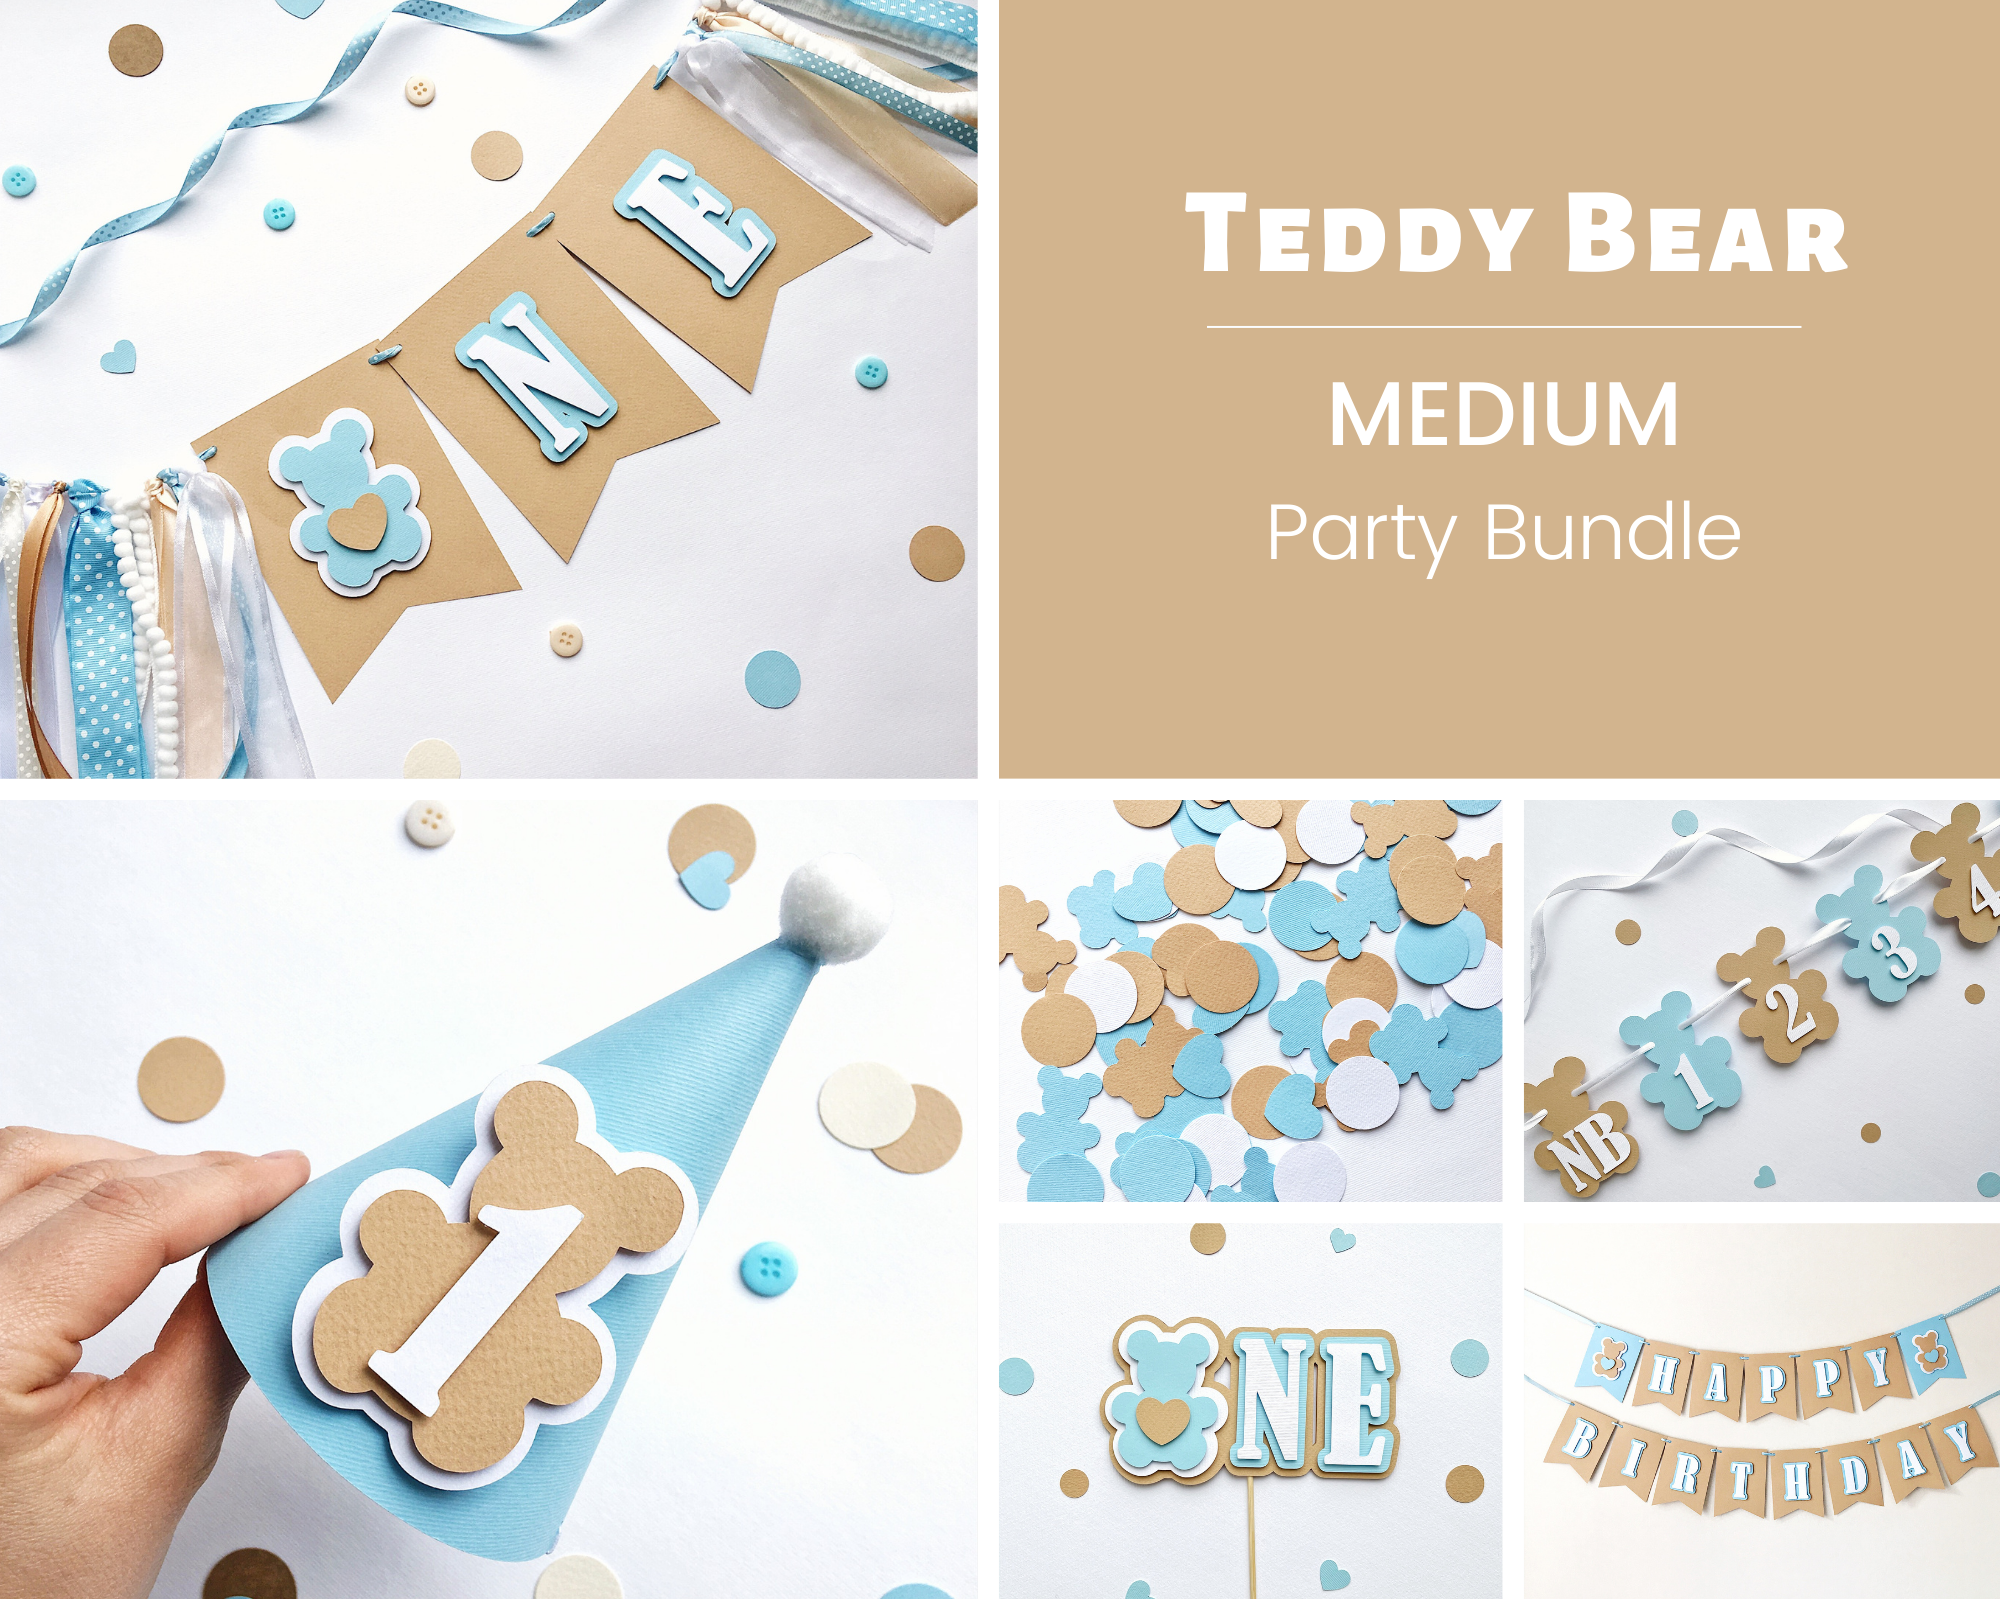 Teddy Bear First Birthday Party Decorations